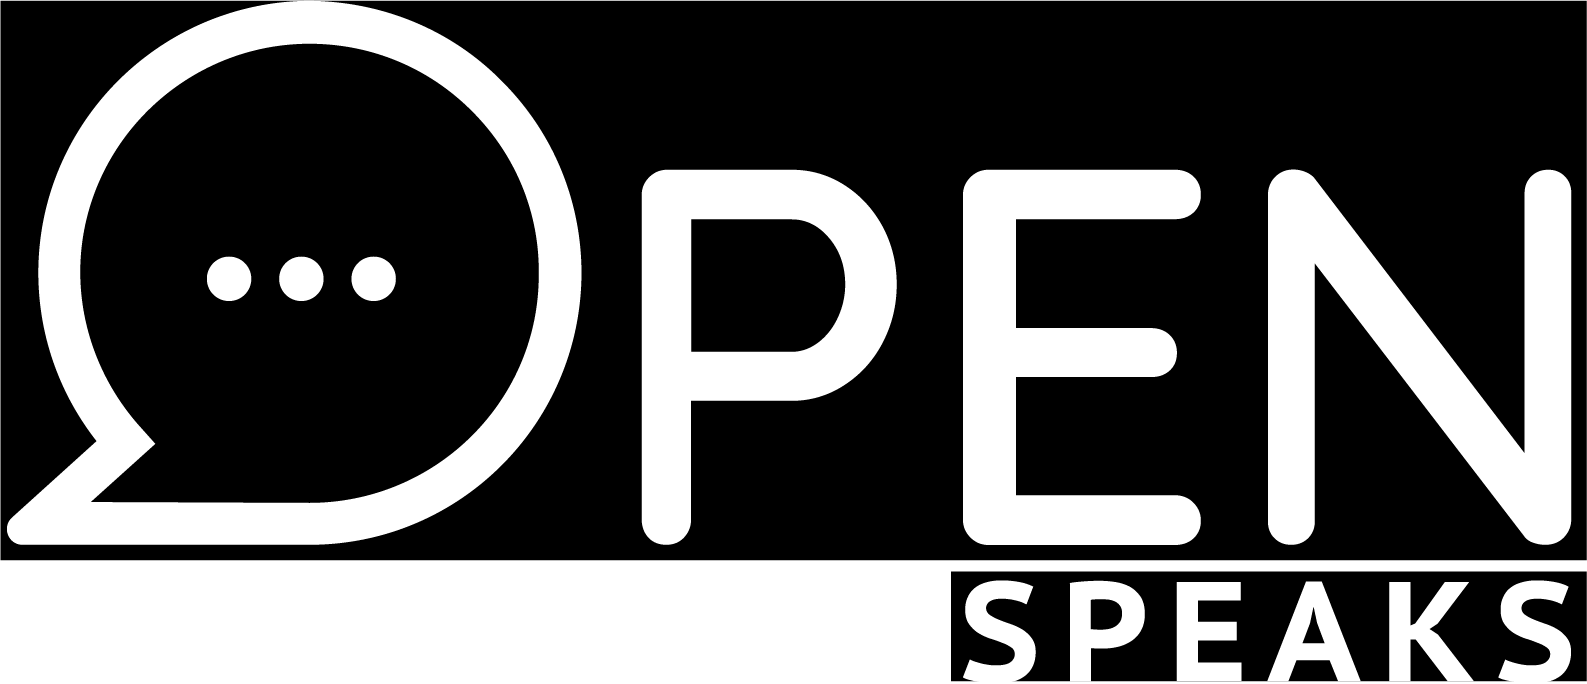 OpenSpeaks logo (black)